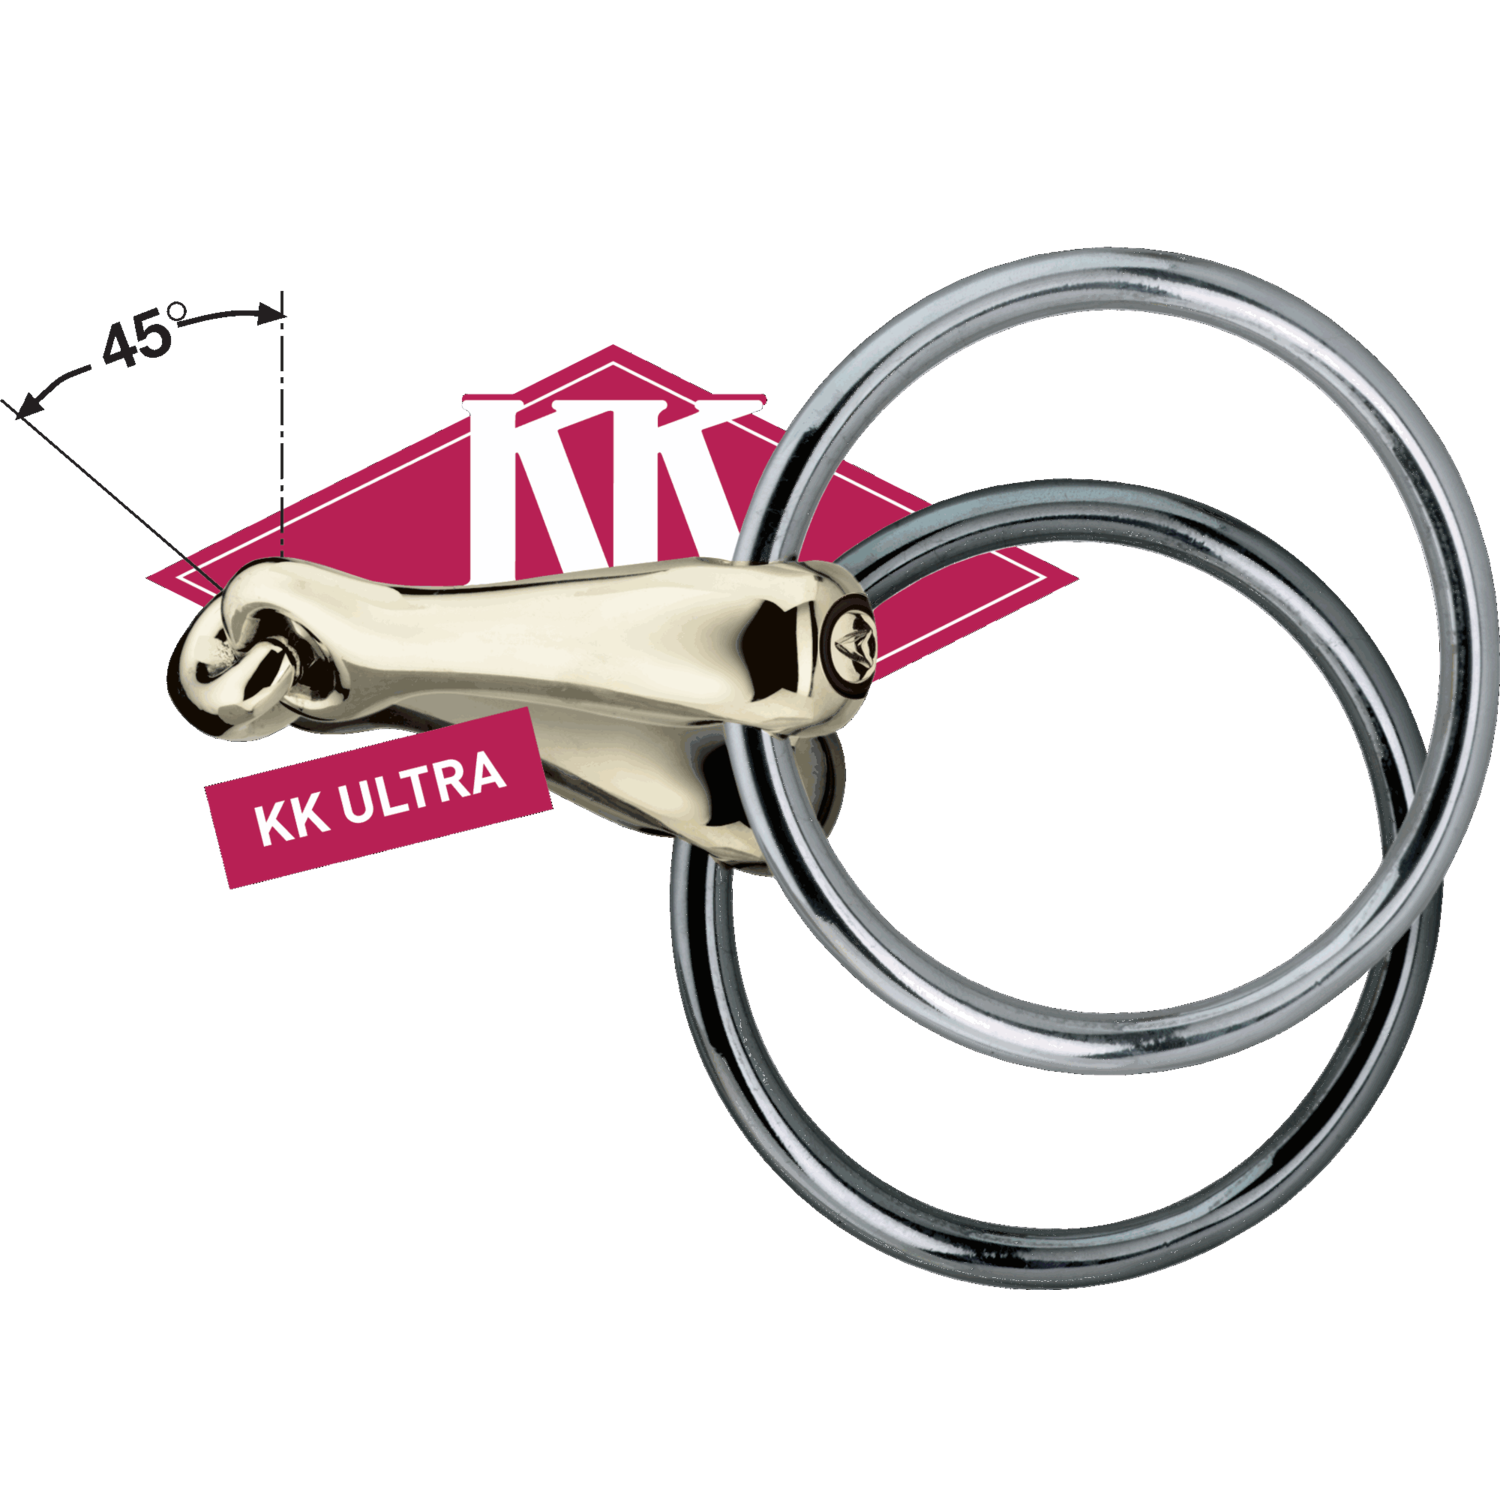 KK ULTRA Springkandare 16 mm "Kimblewick" - Sensogan | Logo_KK_ULTRA_mit_45_Grad_Winkel_Sensogan.png | 1700896672